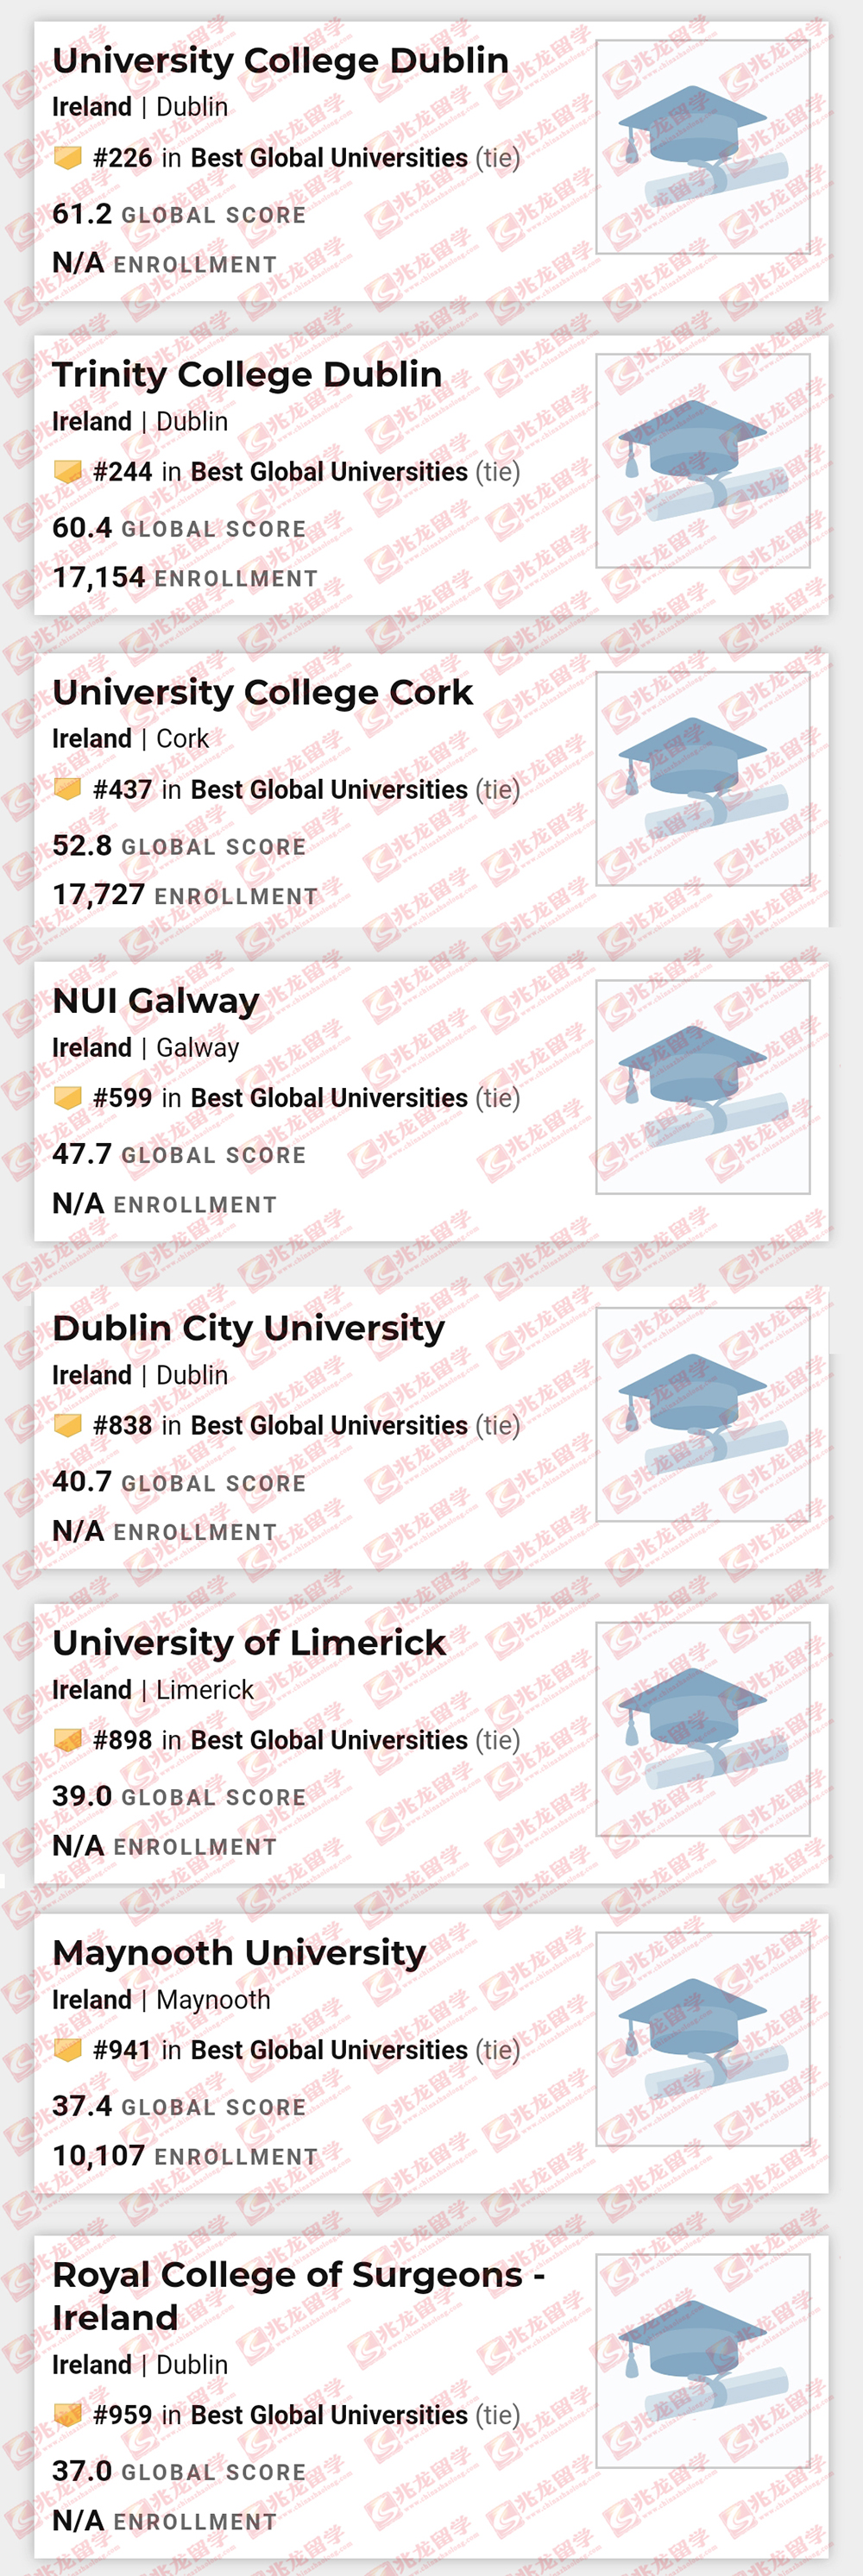 2021USNews世界最佳大学排名-爱尔兰大学排名-加水印.jpg